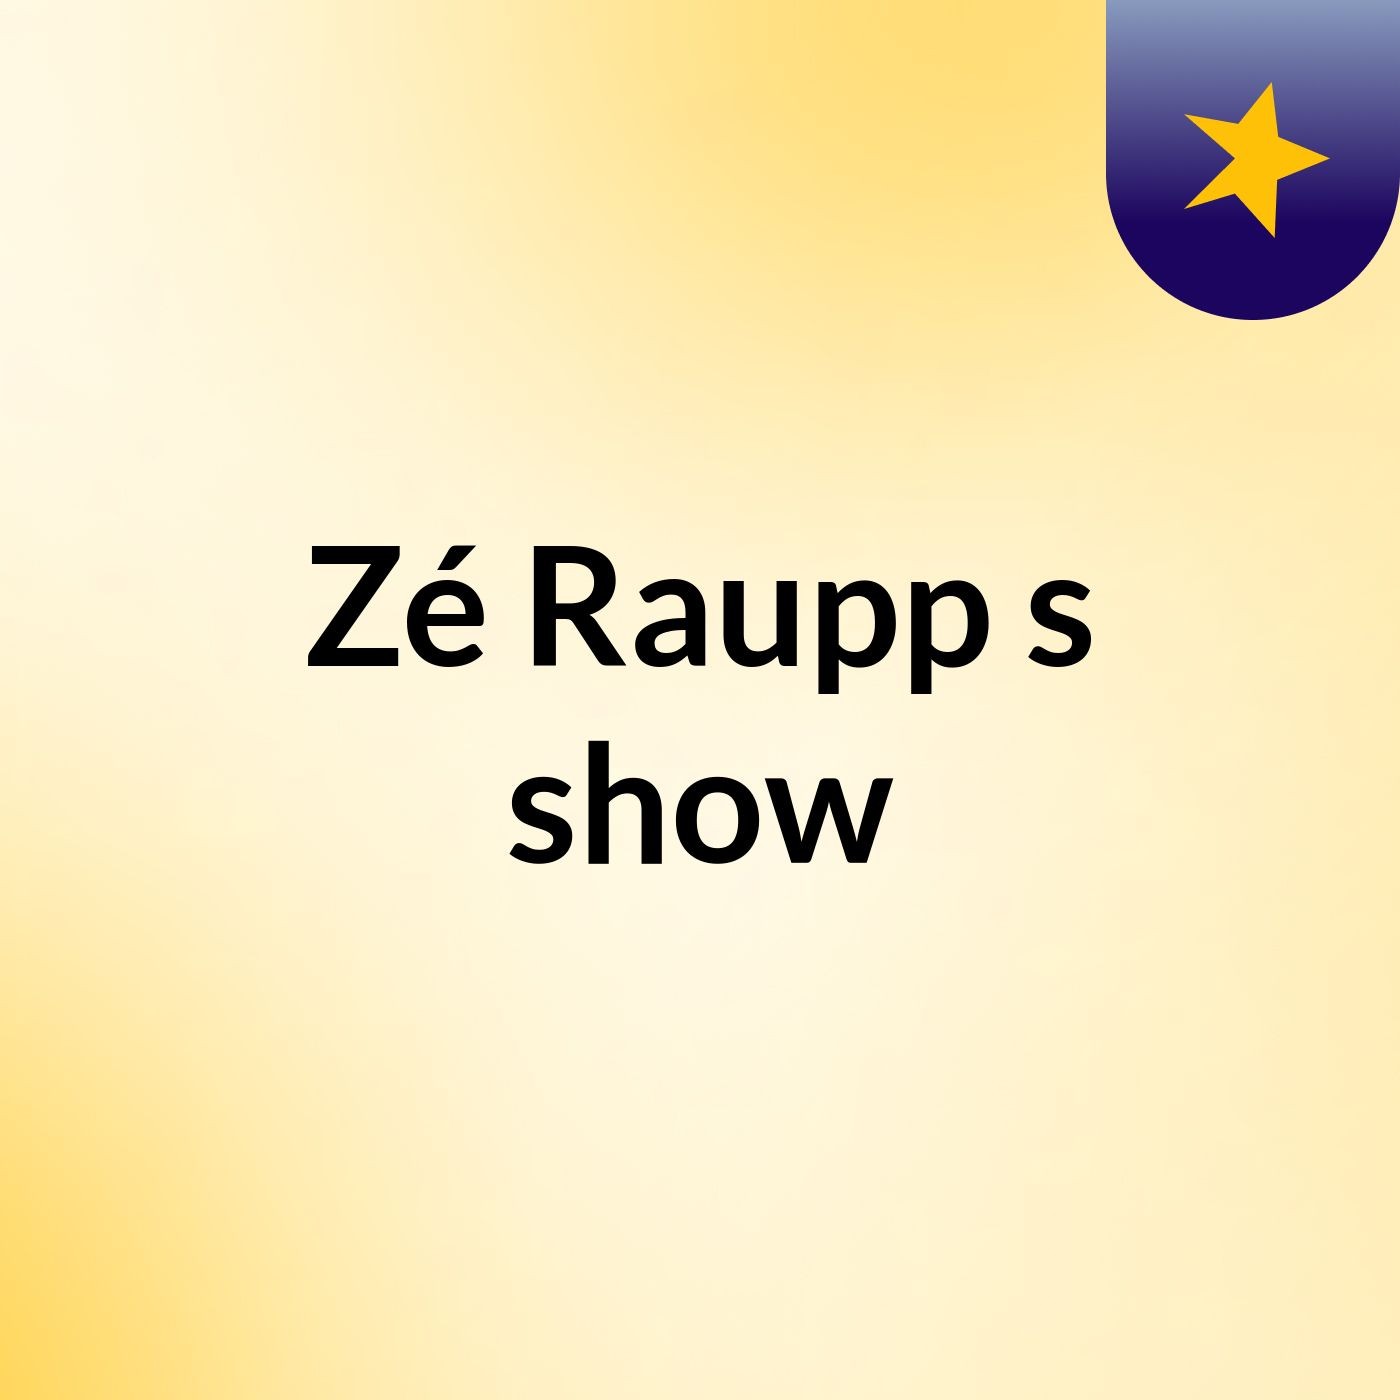 Zé Raupp's show